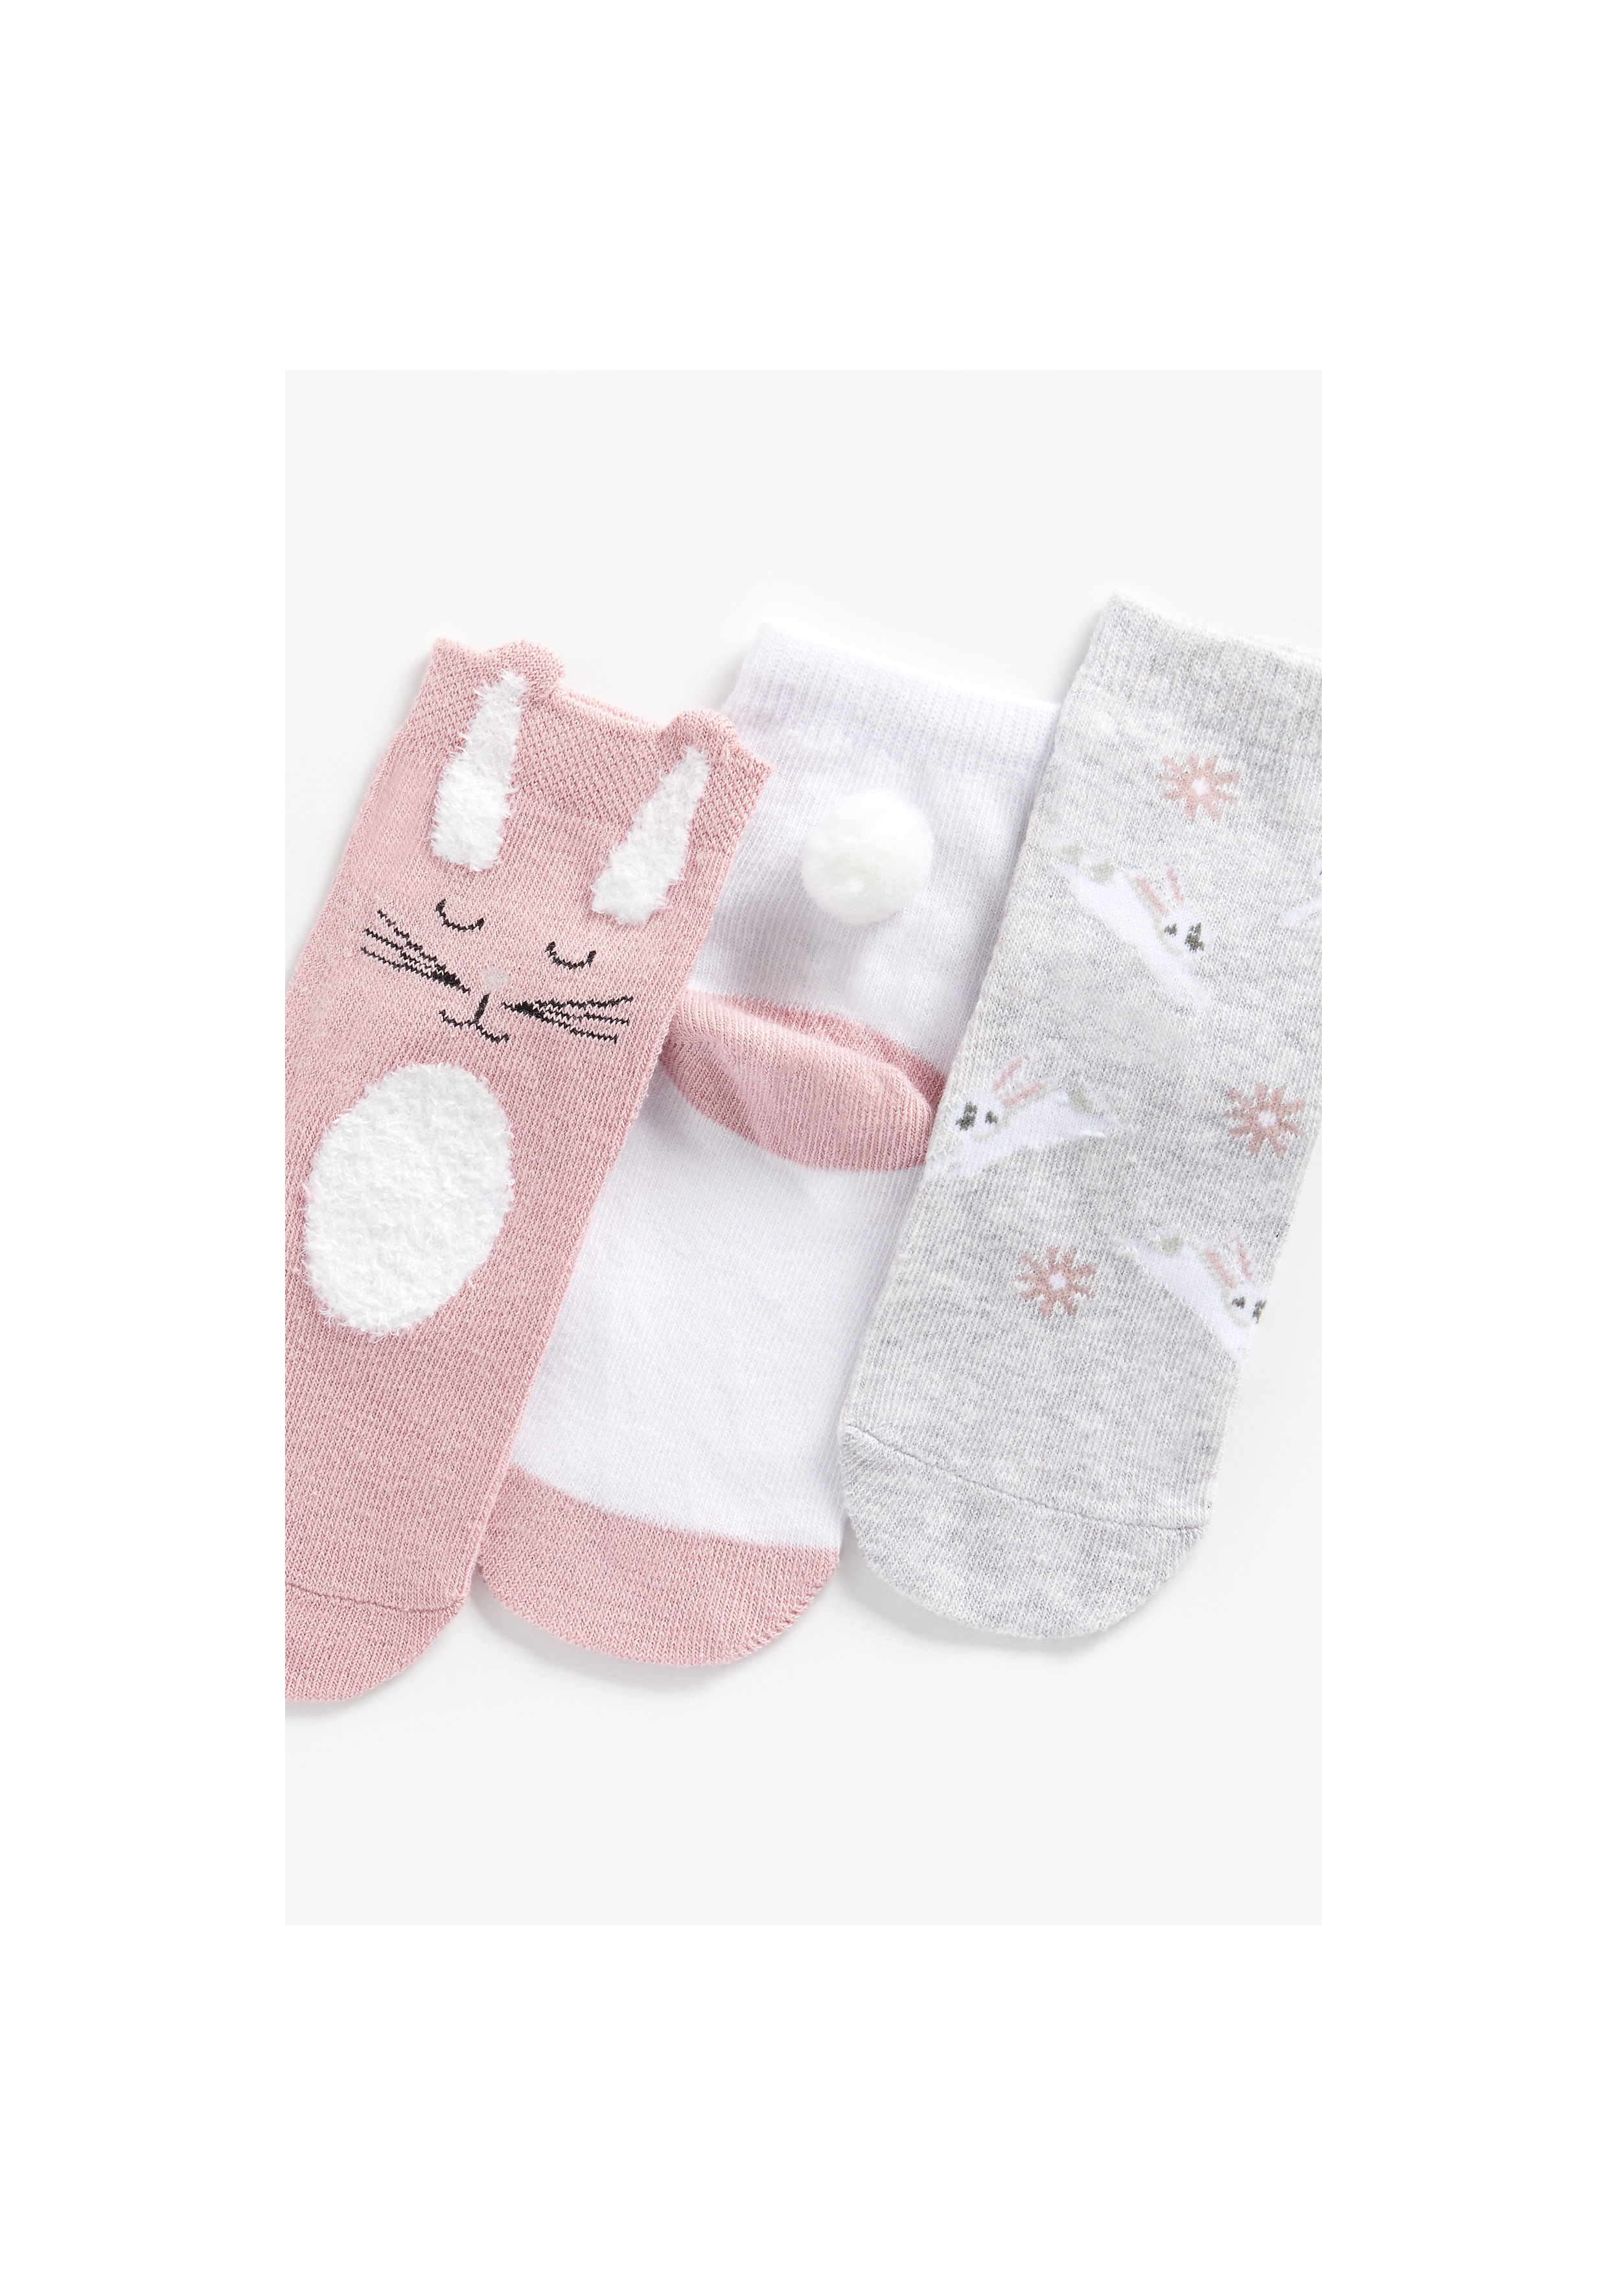 Mothercare | Girls Socks Bunny Design - Pack Of 3 - Multicolor 1